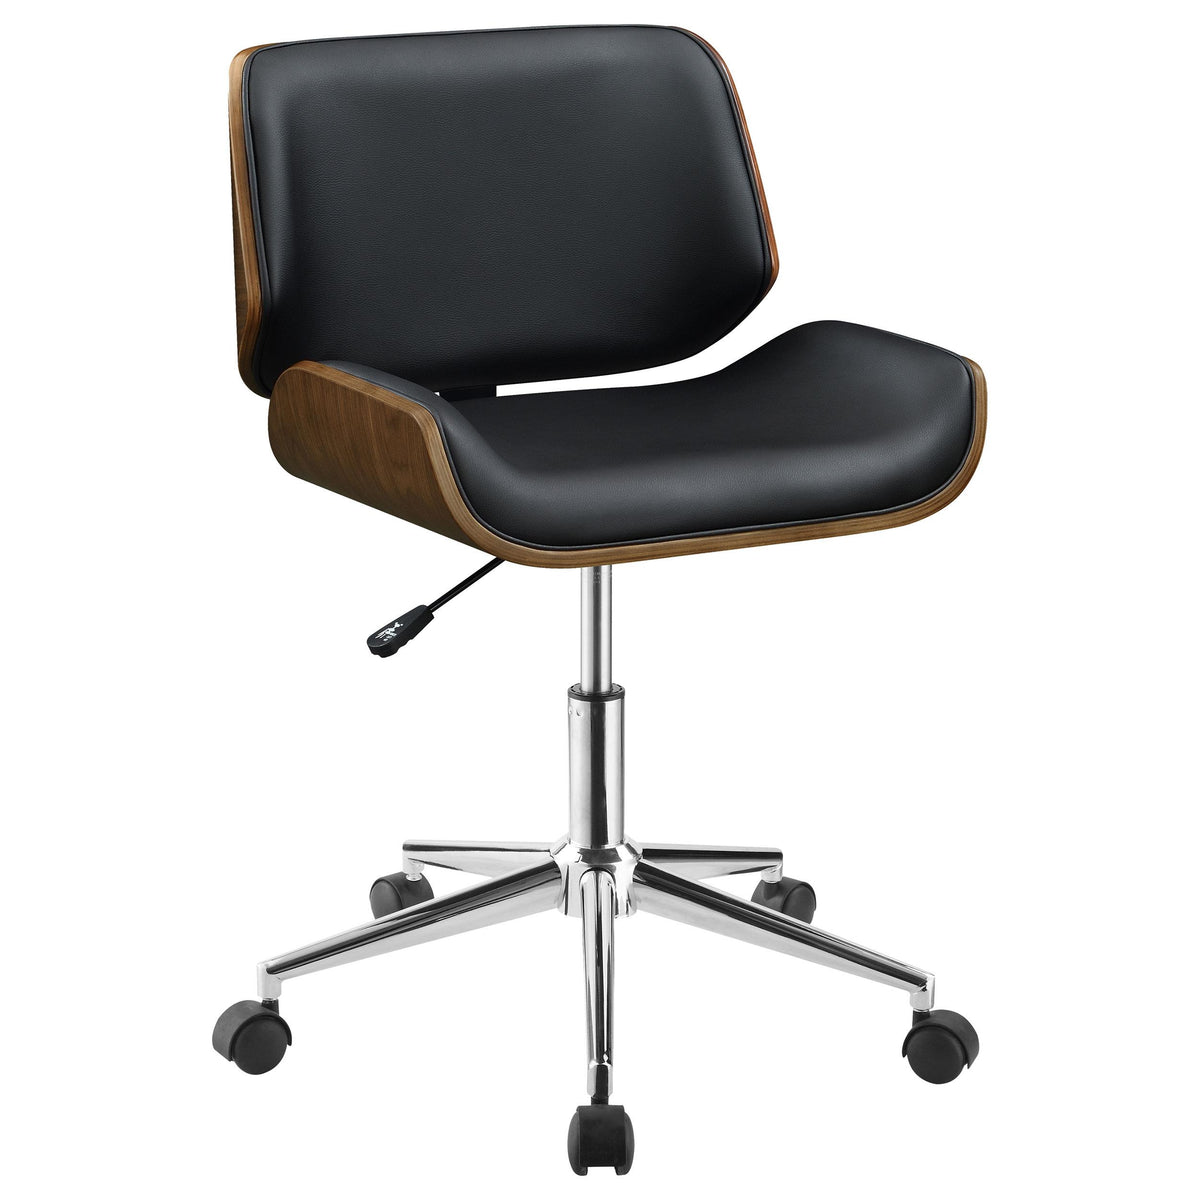 Addington Adjustable Height Office Chair Black and Chrome  Las Vegas Furniture Stores